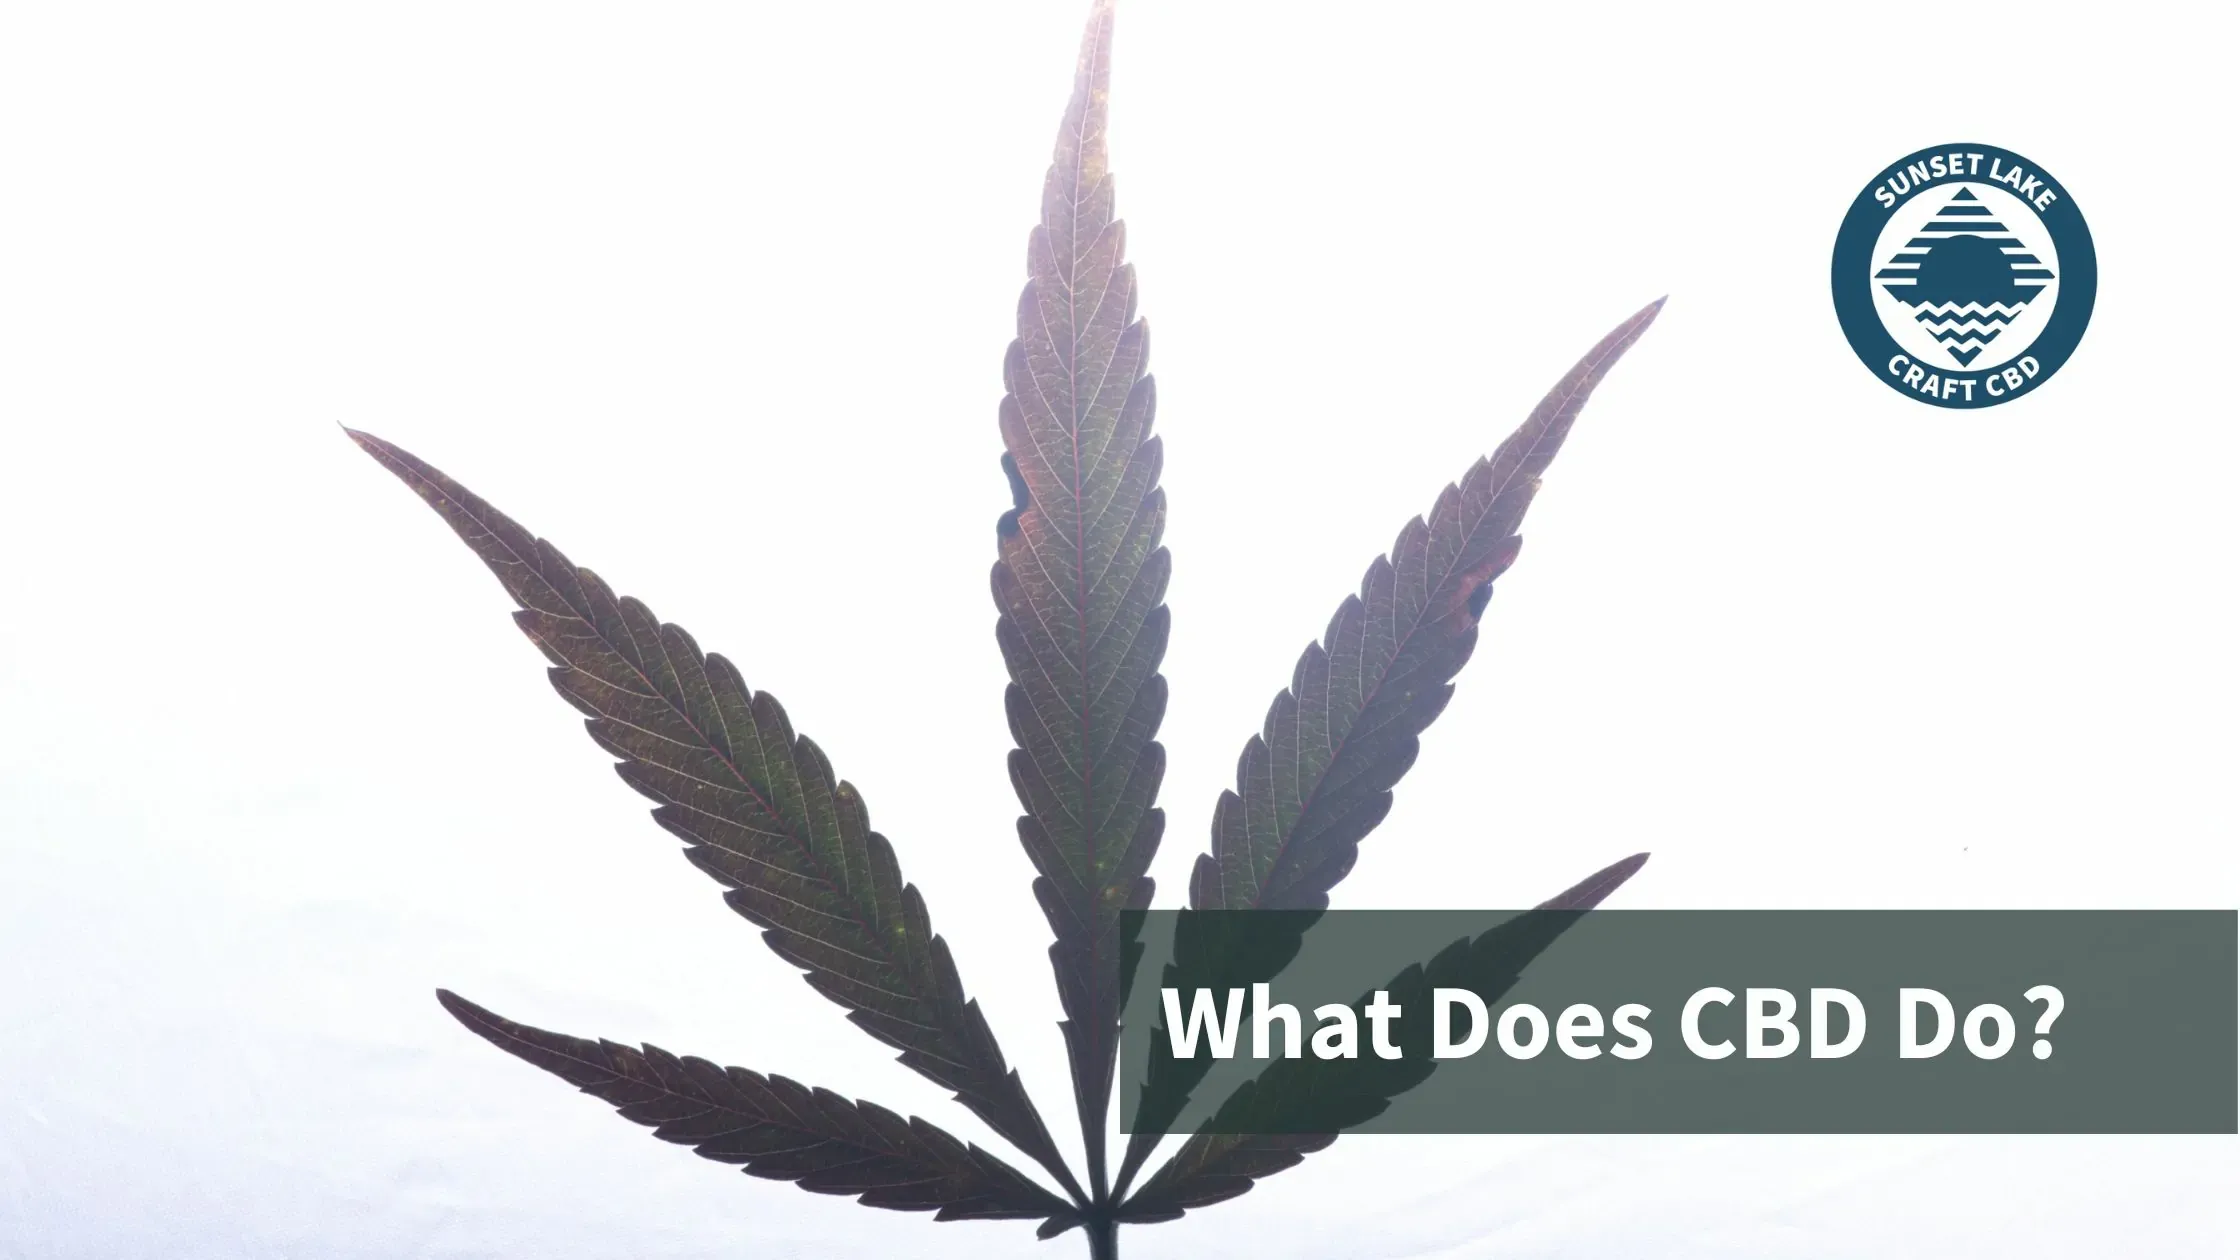 A hemp leaf with the text "What does CBD do?" overlaid